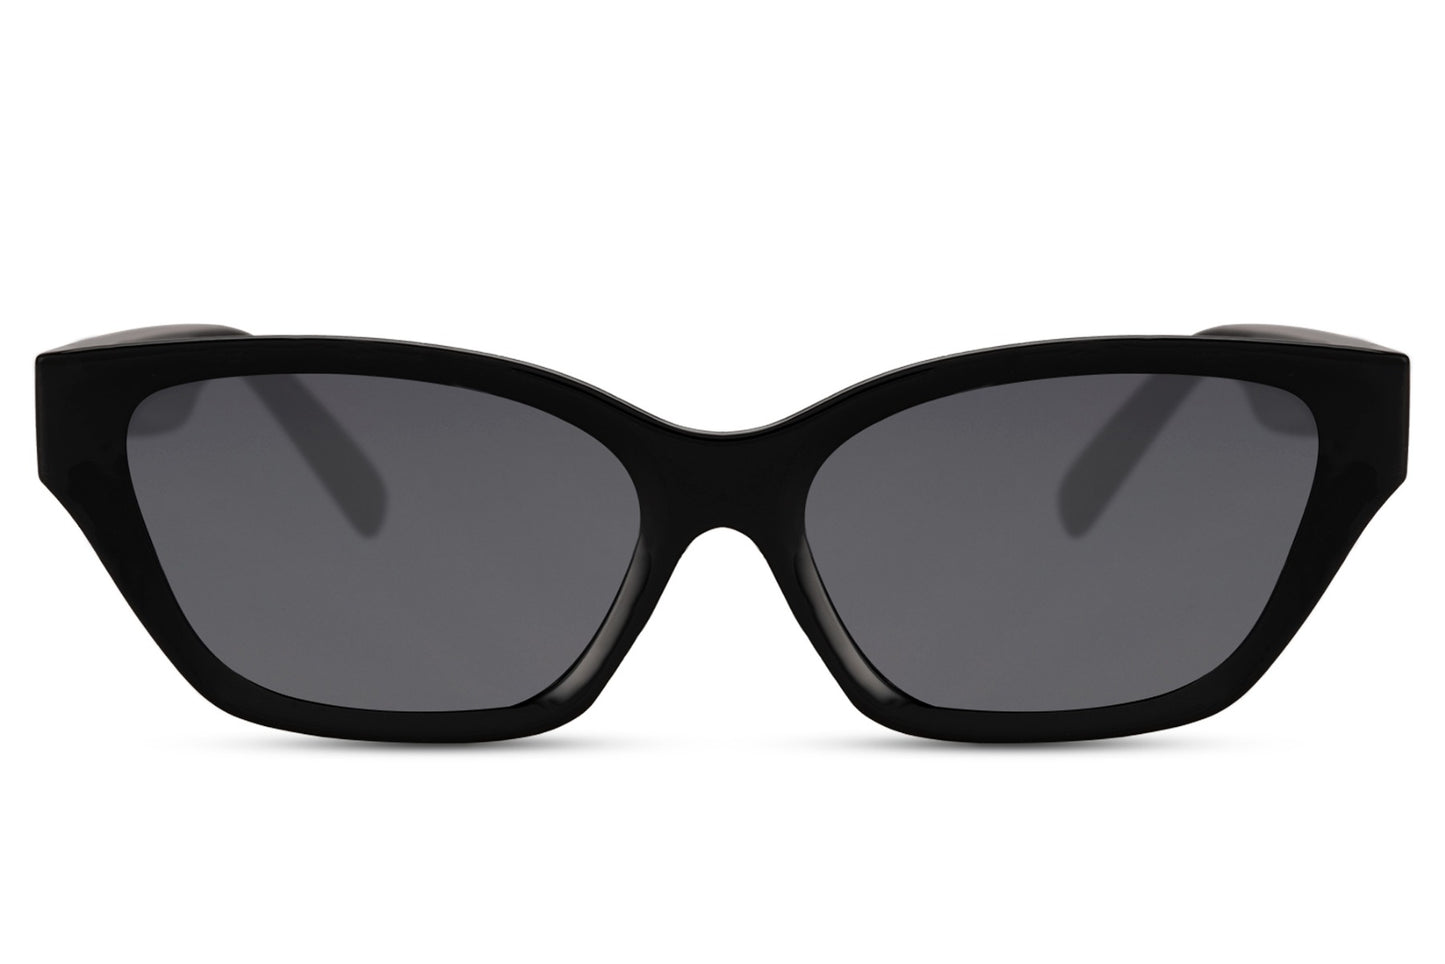 Designer Geometric Cateye Sunglasses - Eco Friendly